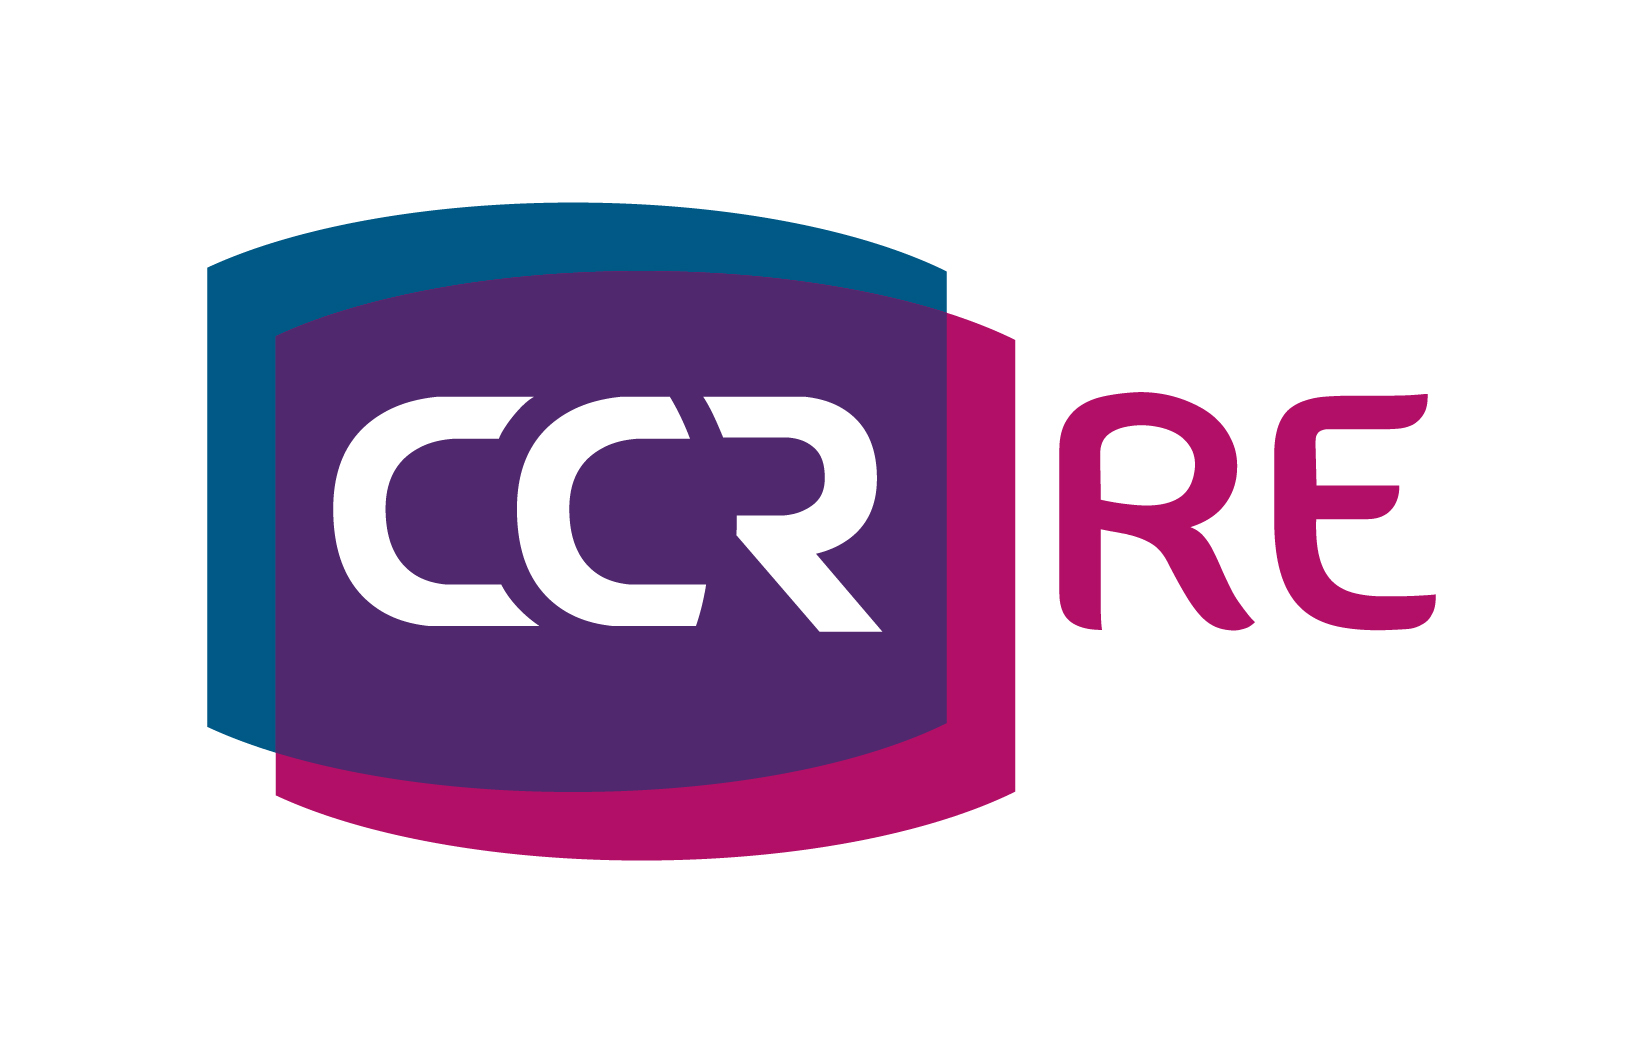 C:\Users\frousset\AppData\Local\Microsoft\Windows\INetCache\Content.Word\CCR RE - Logo.jpg